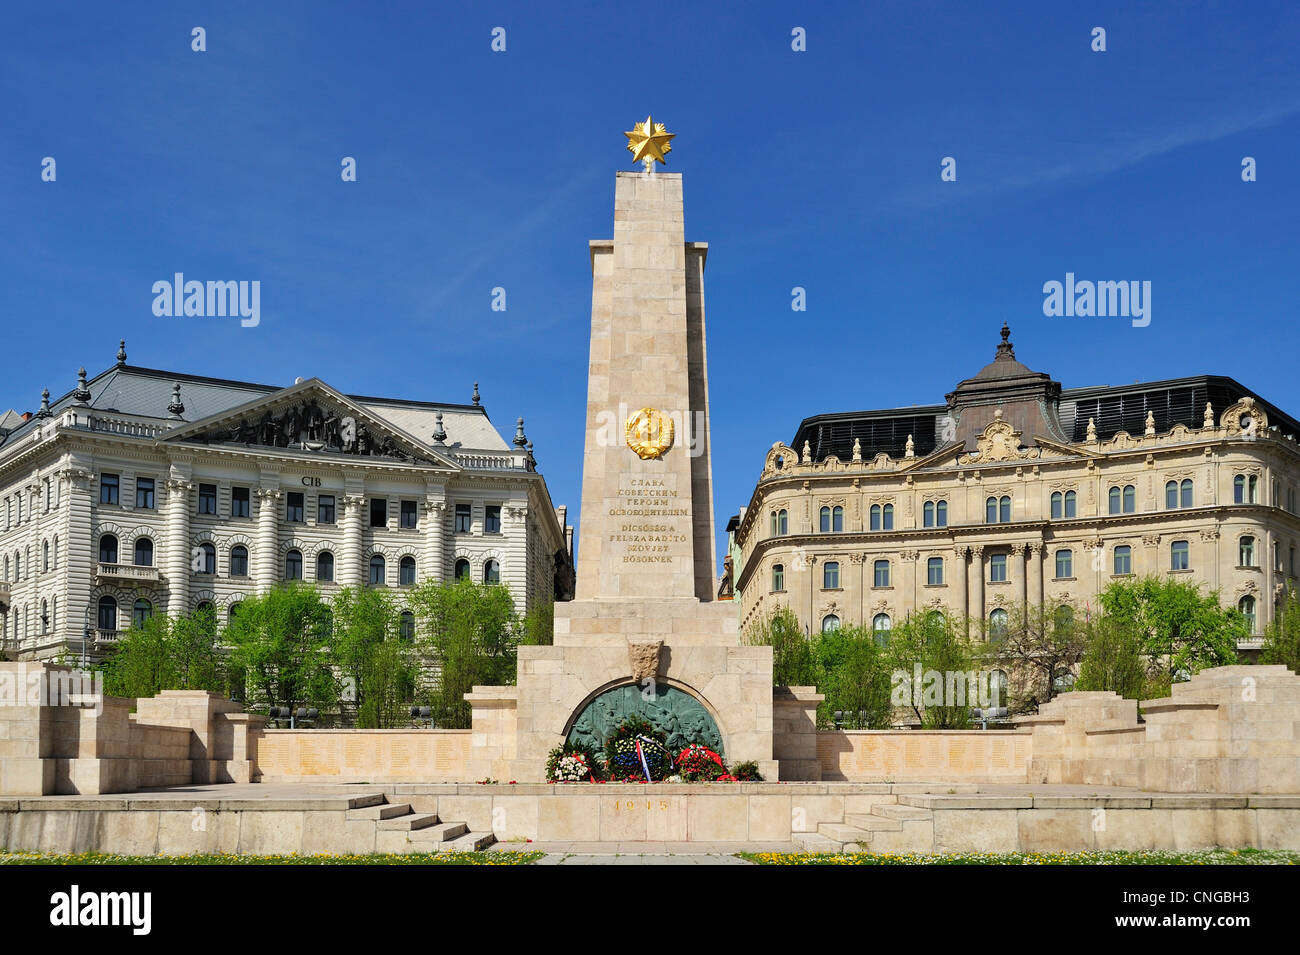 Soviet Army Memorial, Szabadság tér (Liberty Square), Budapest, Hungary Stock Photo